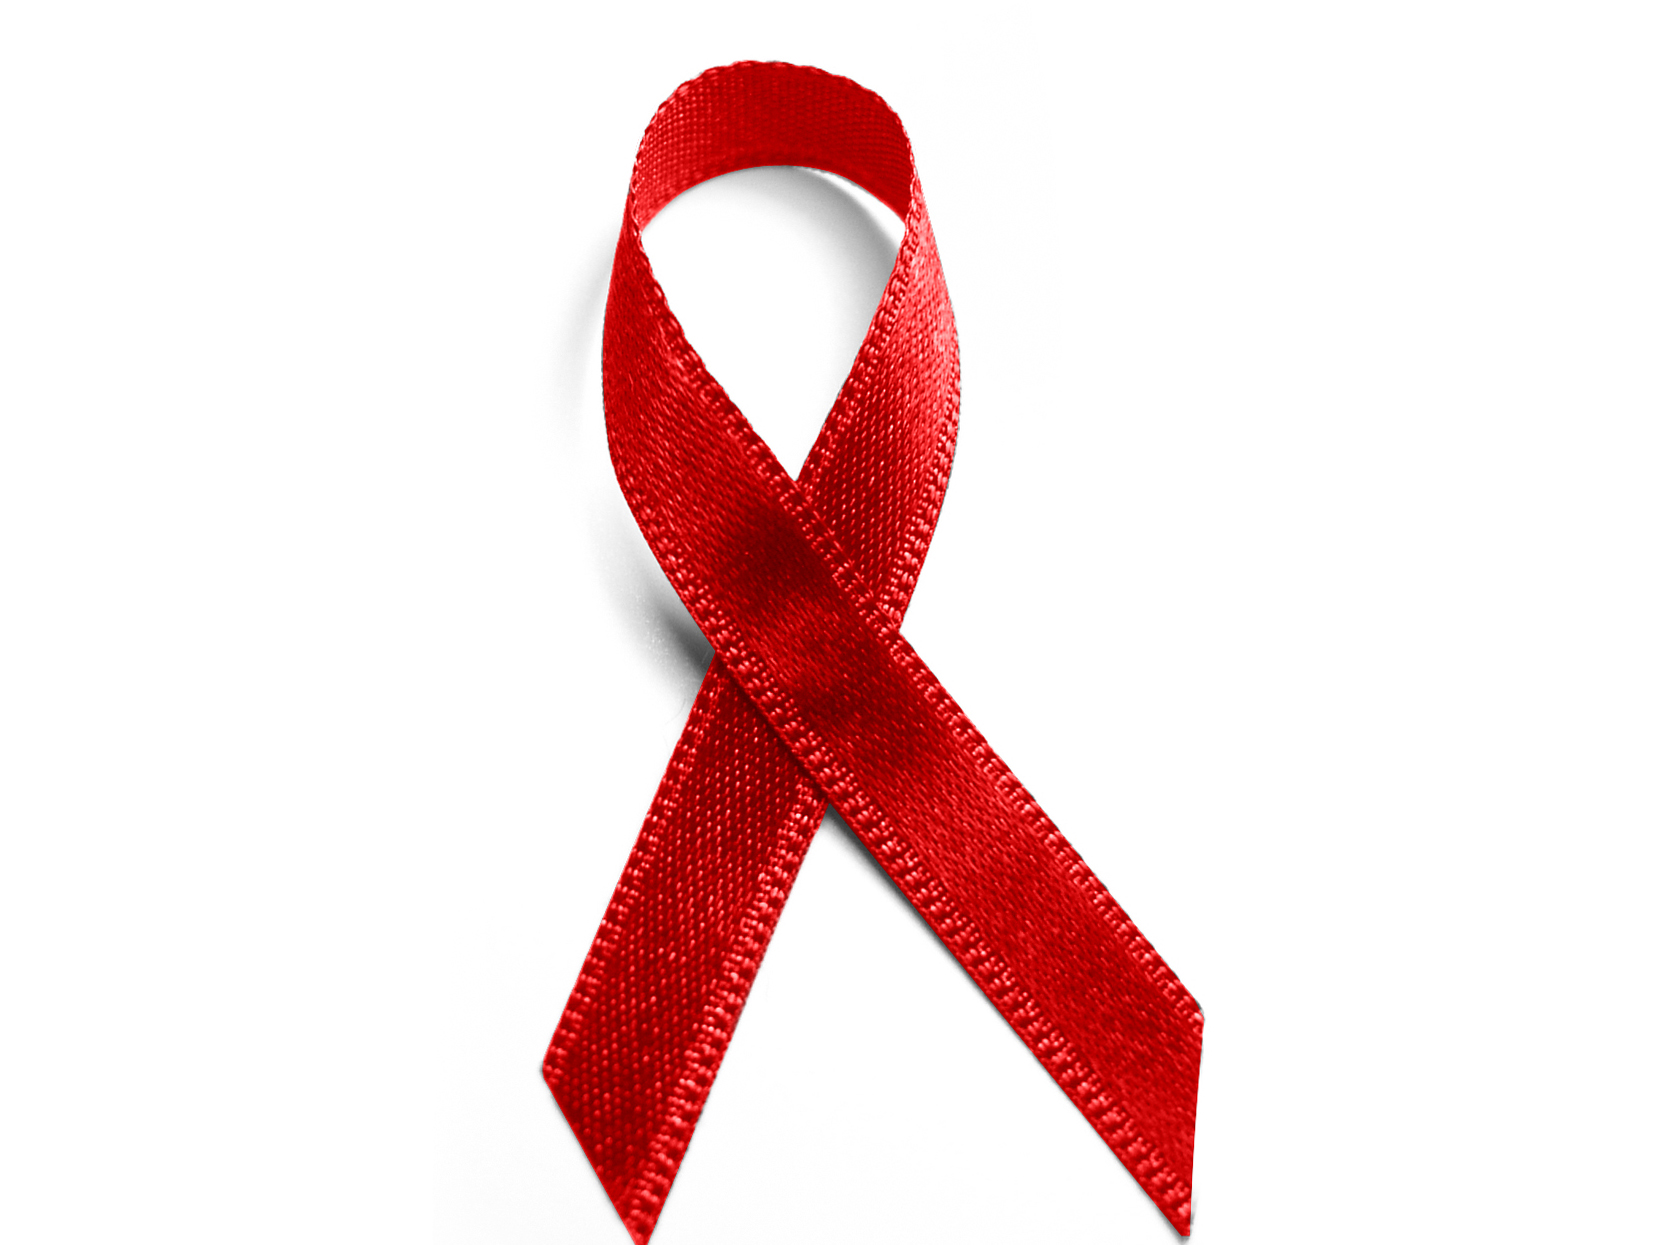 Цвет вич. Ленточка СПИД. Лента красная. Красная ленточка ВИЧ. Символ ВИЧ красная лента.